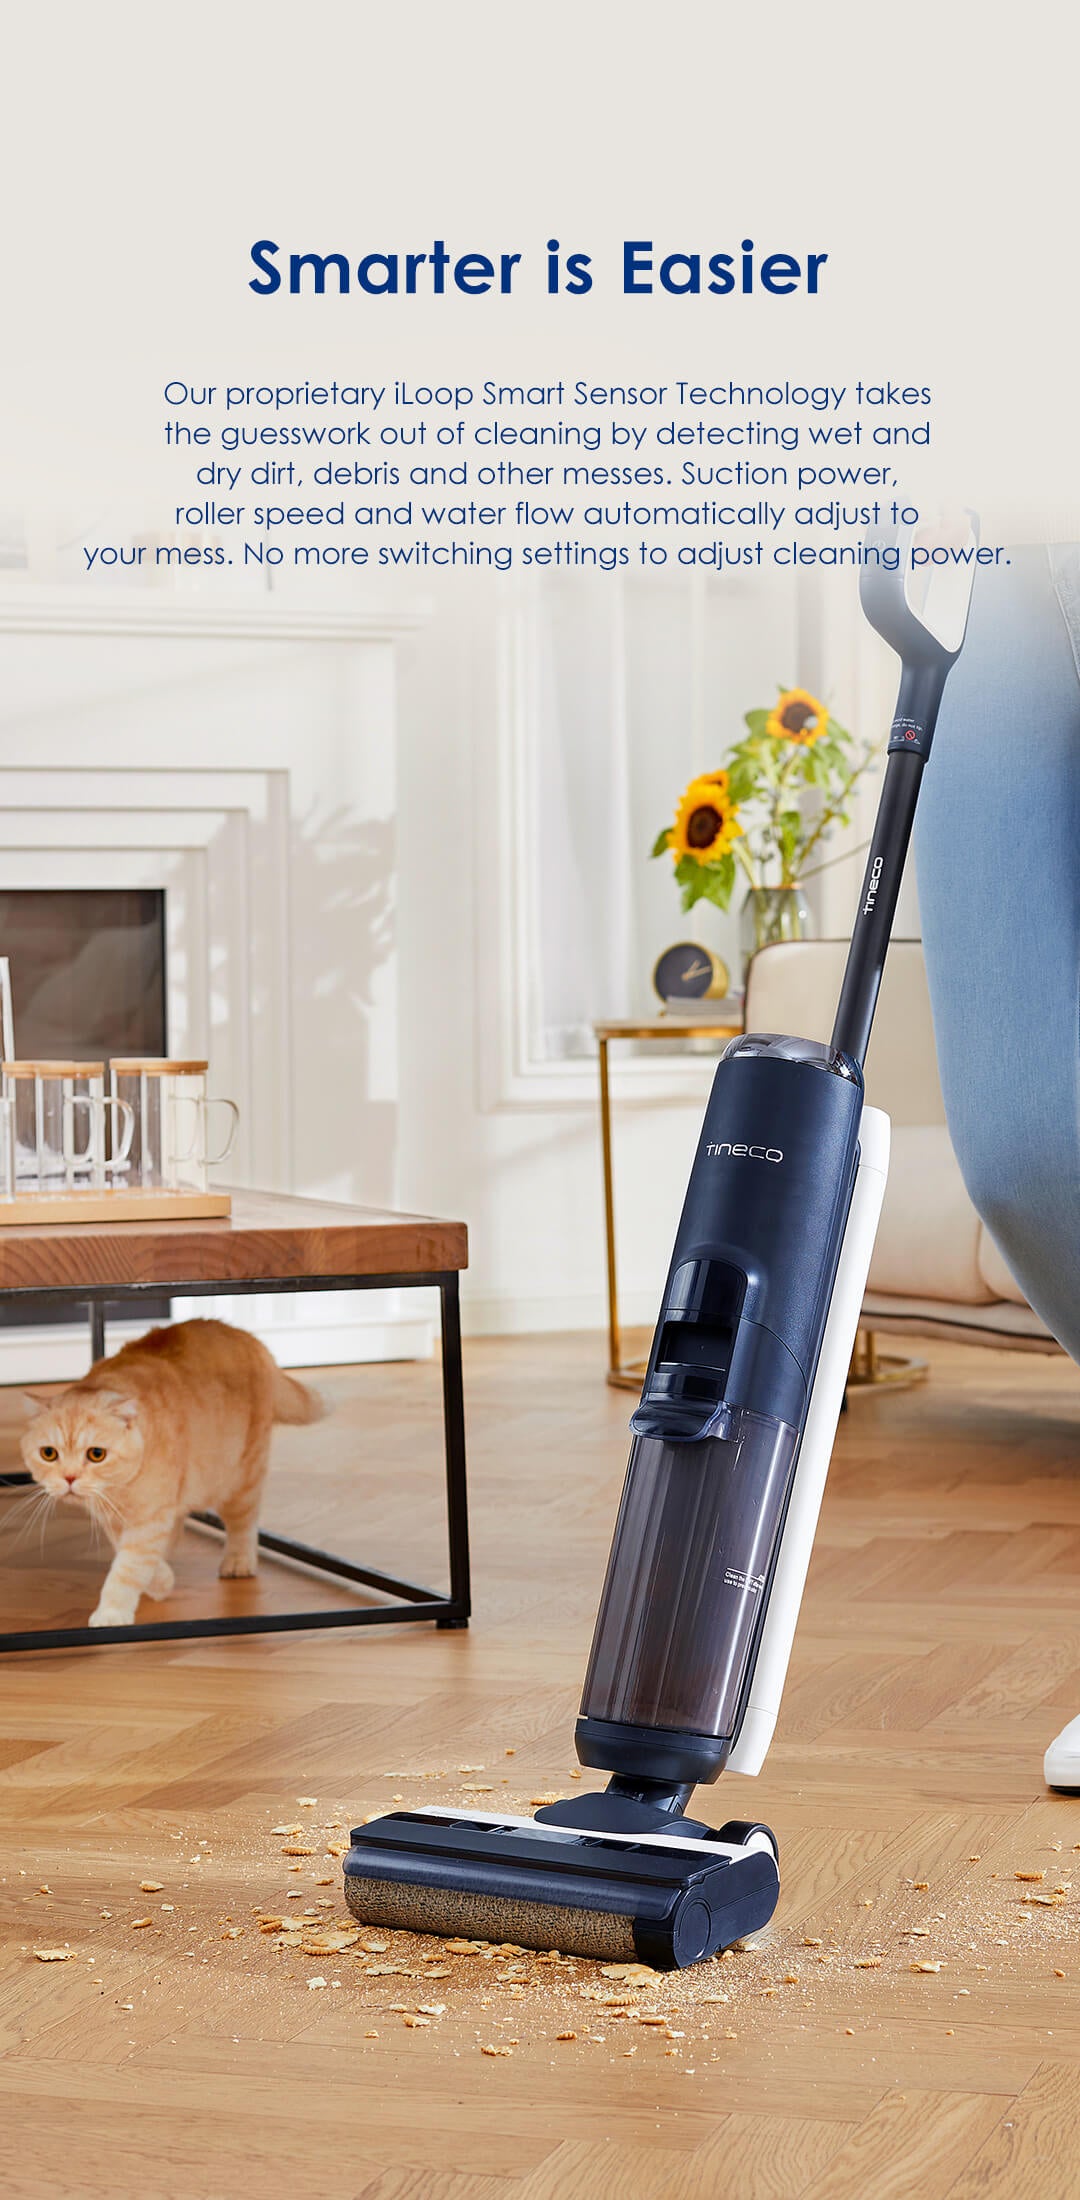 Introducing Tineco FLOOR ONE S5 Smart Wet Dry Vacuum Cleaner